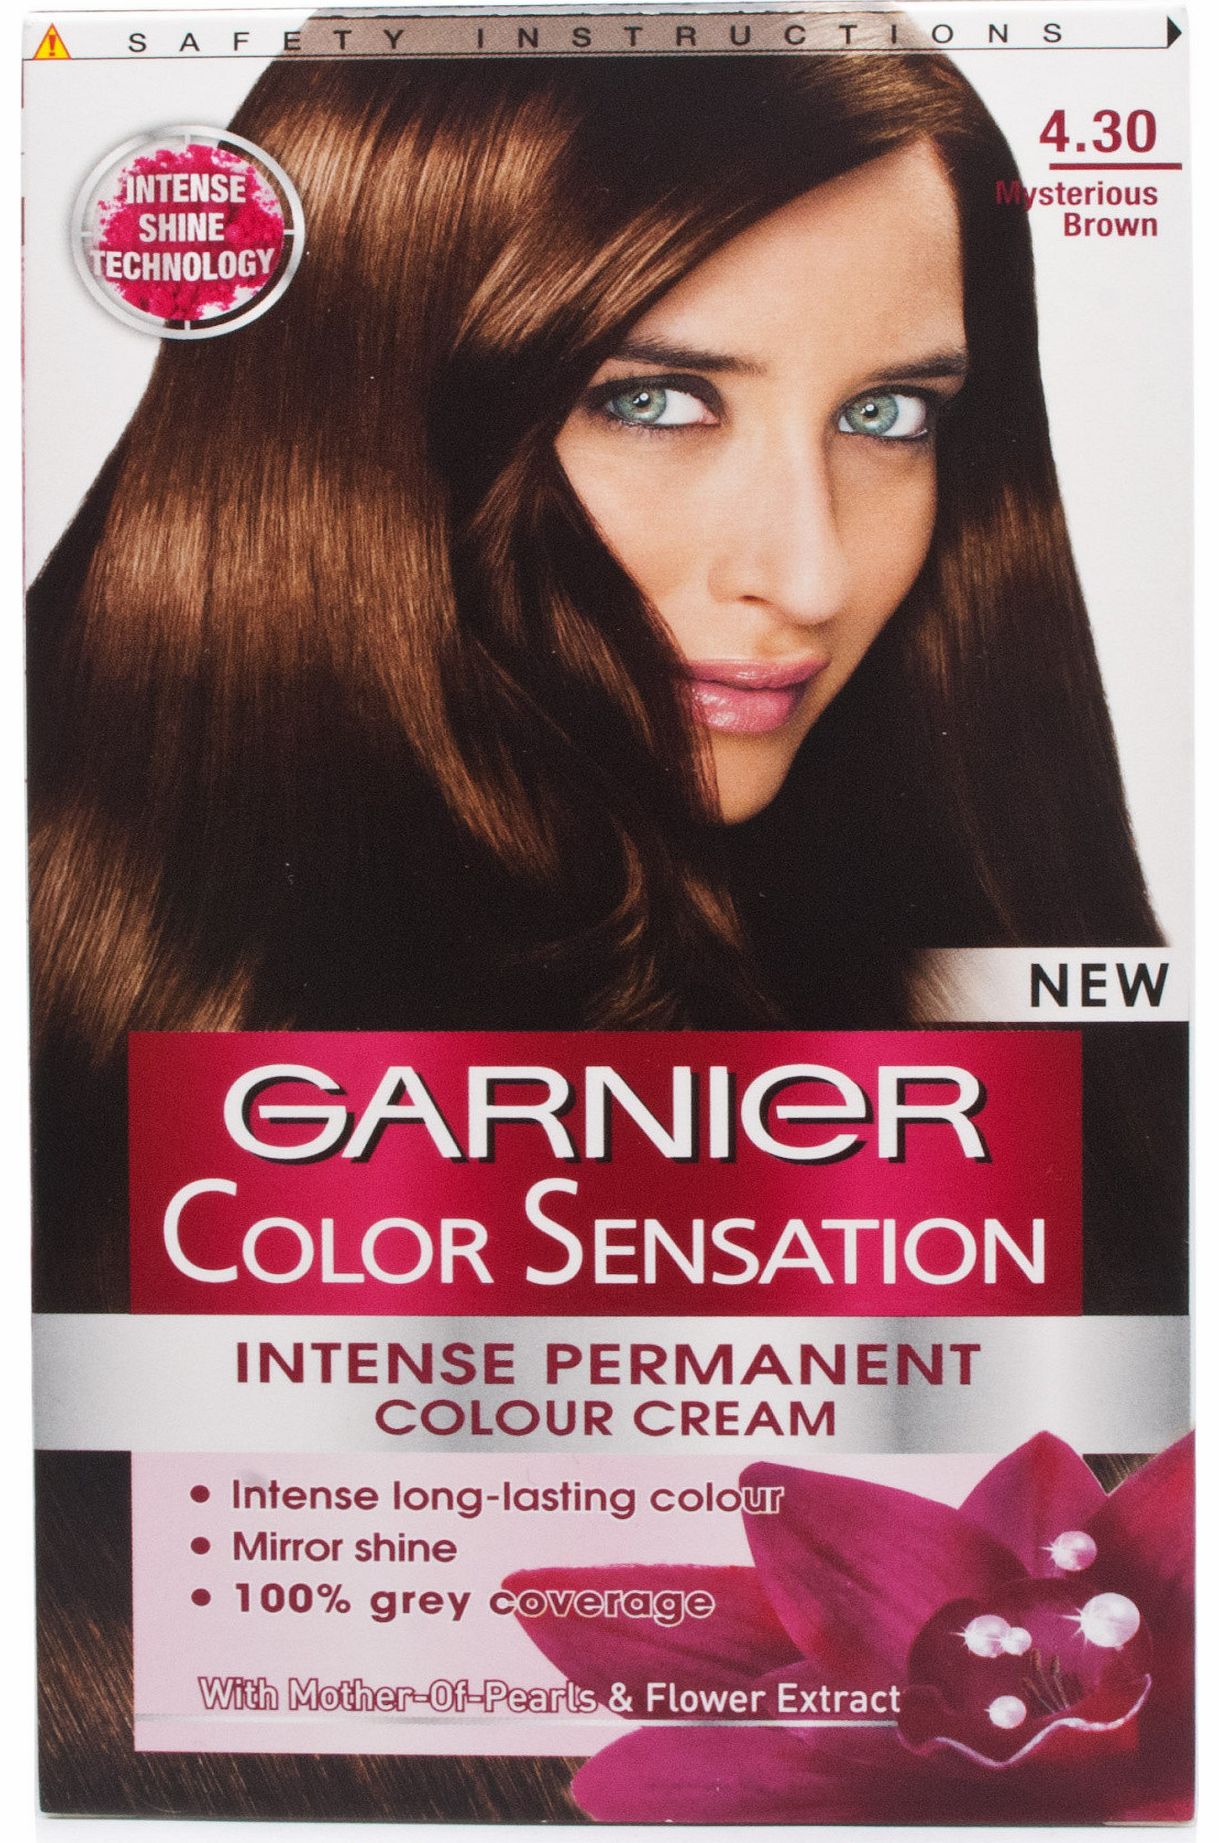 Garnier Colour Sensation 4.30 Mysterious Brown